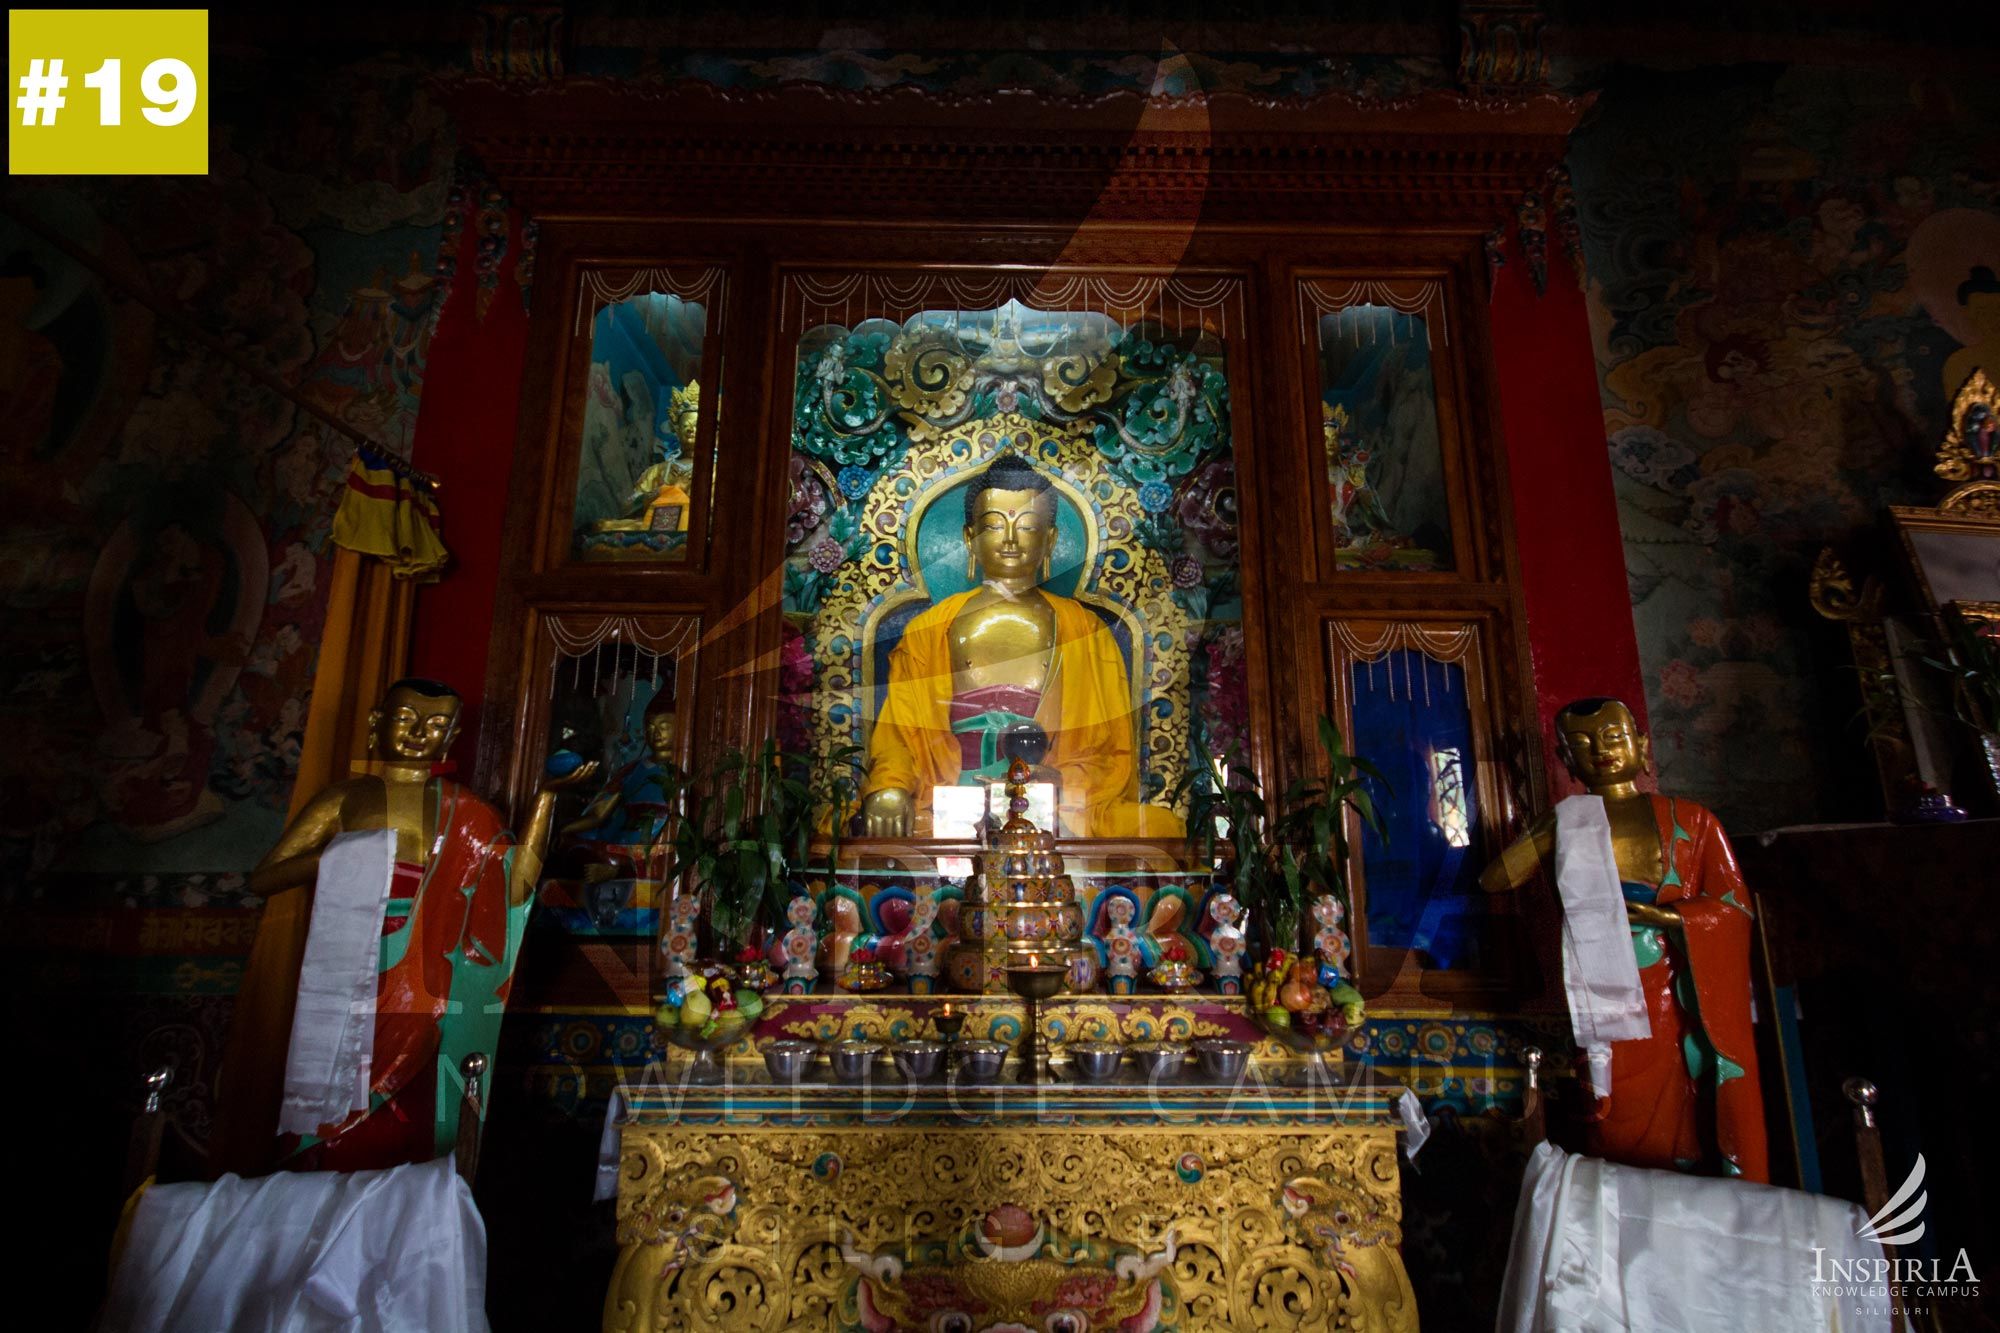 salugara-monastery-siliguri-inspiria-knowledge-campus-1001-things-to-do-buddha-inside-wb